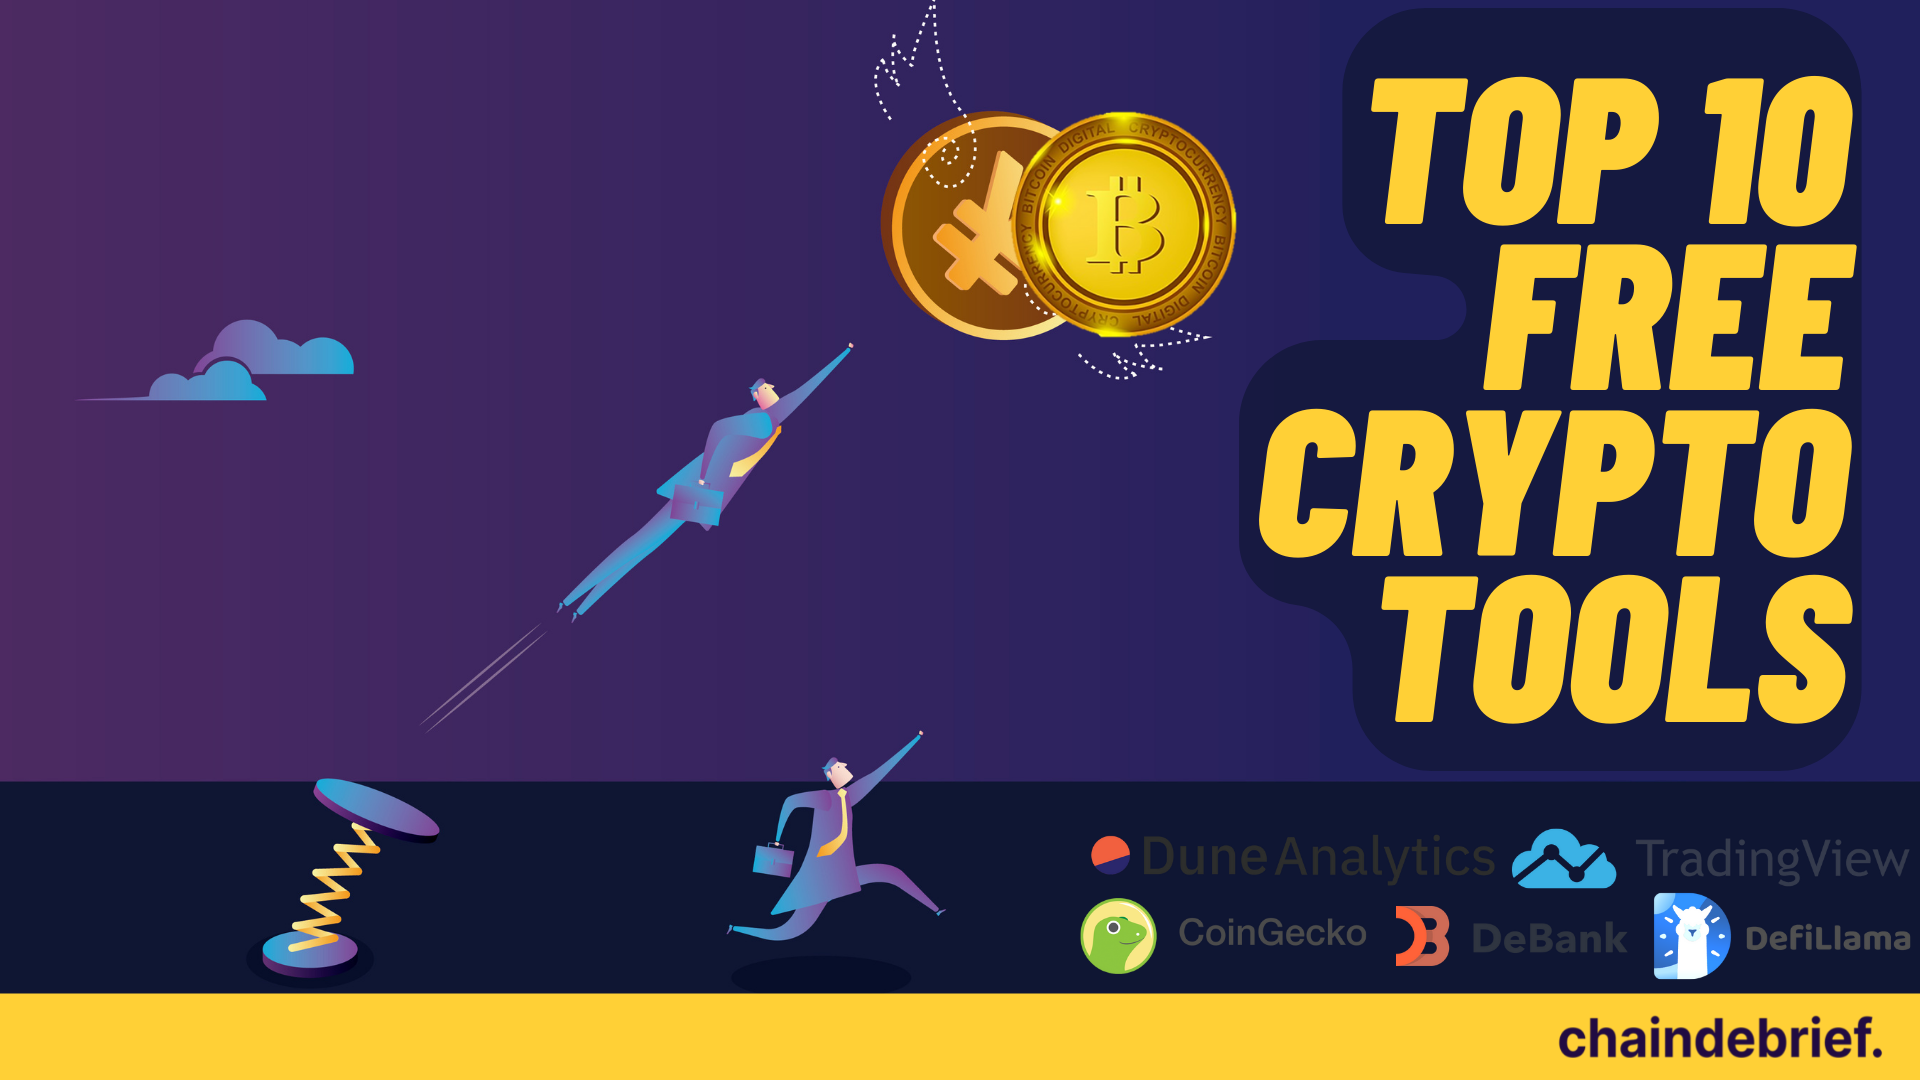 Top 10 free crypto tools